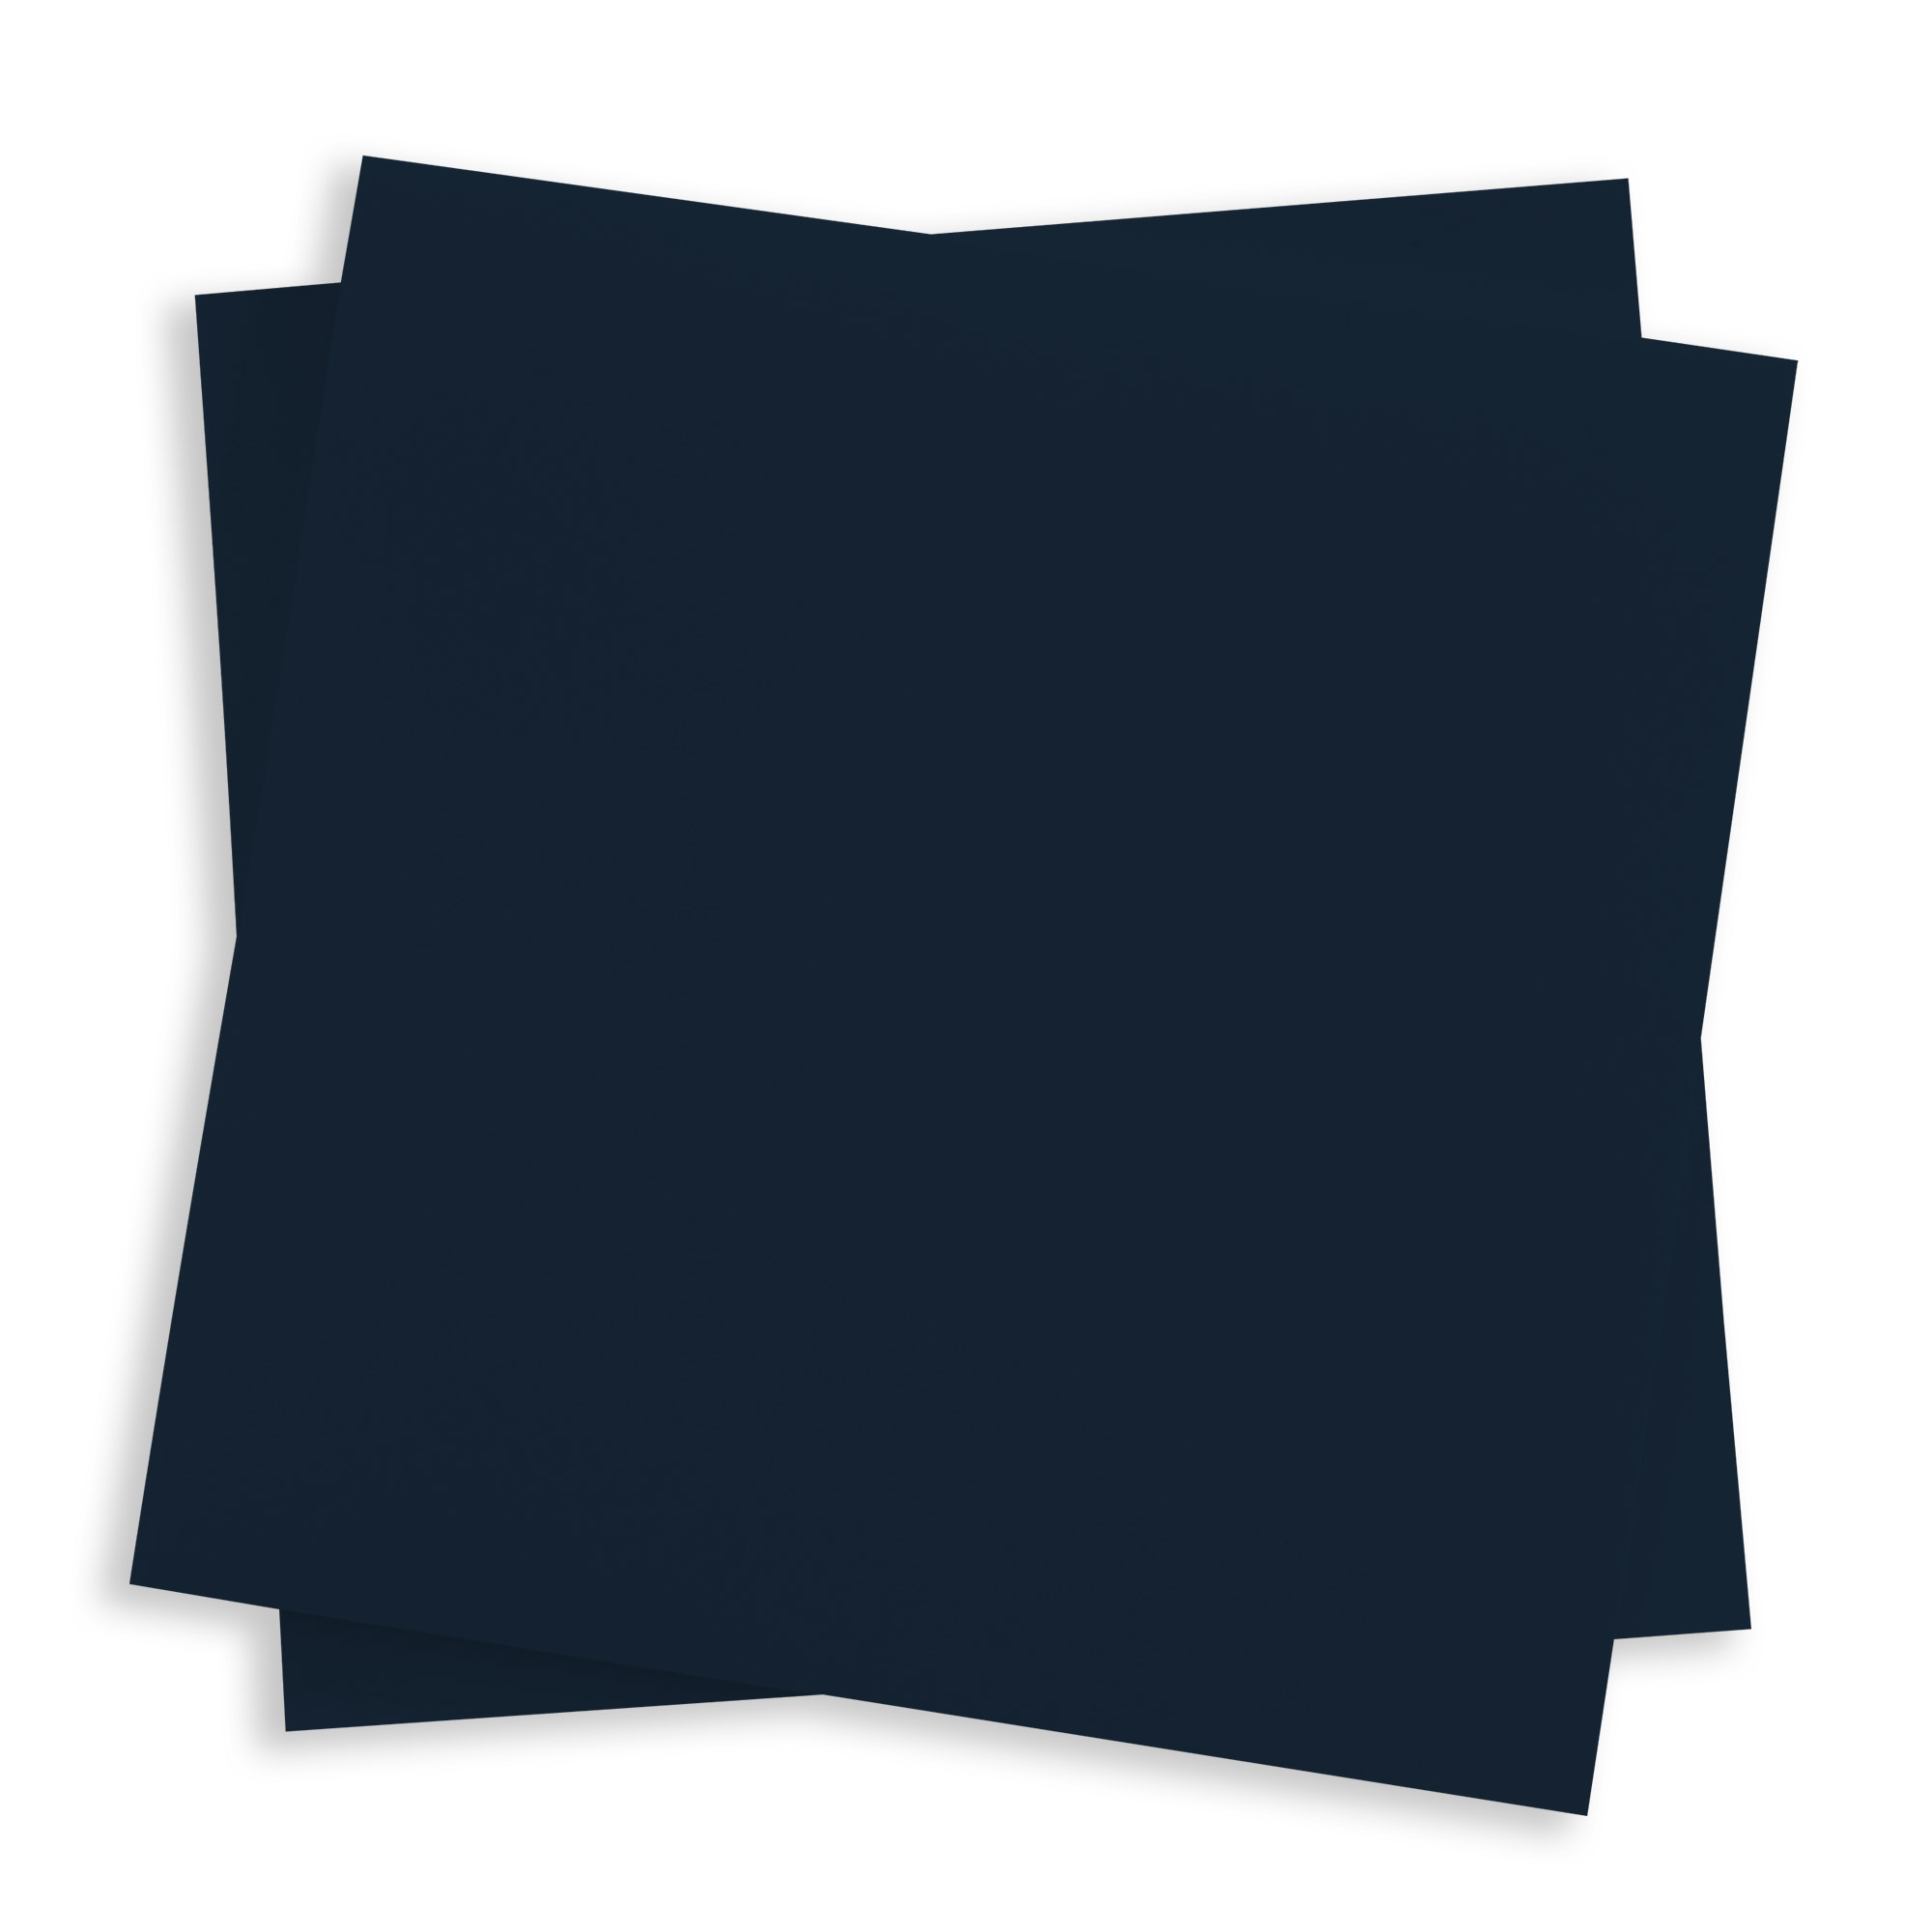 Dark Navy Blue Card Stock - 12 x 12 Gmund Colors Matt 111lb Cover